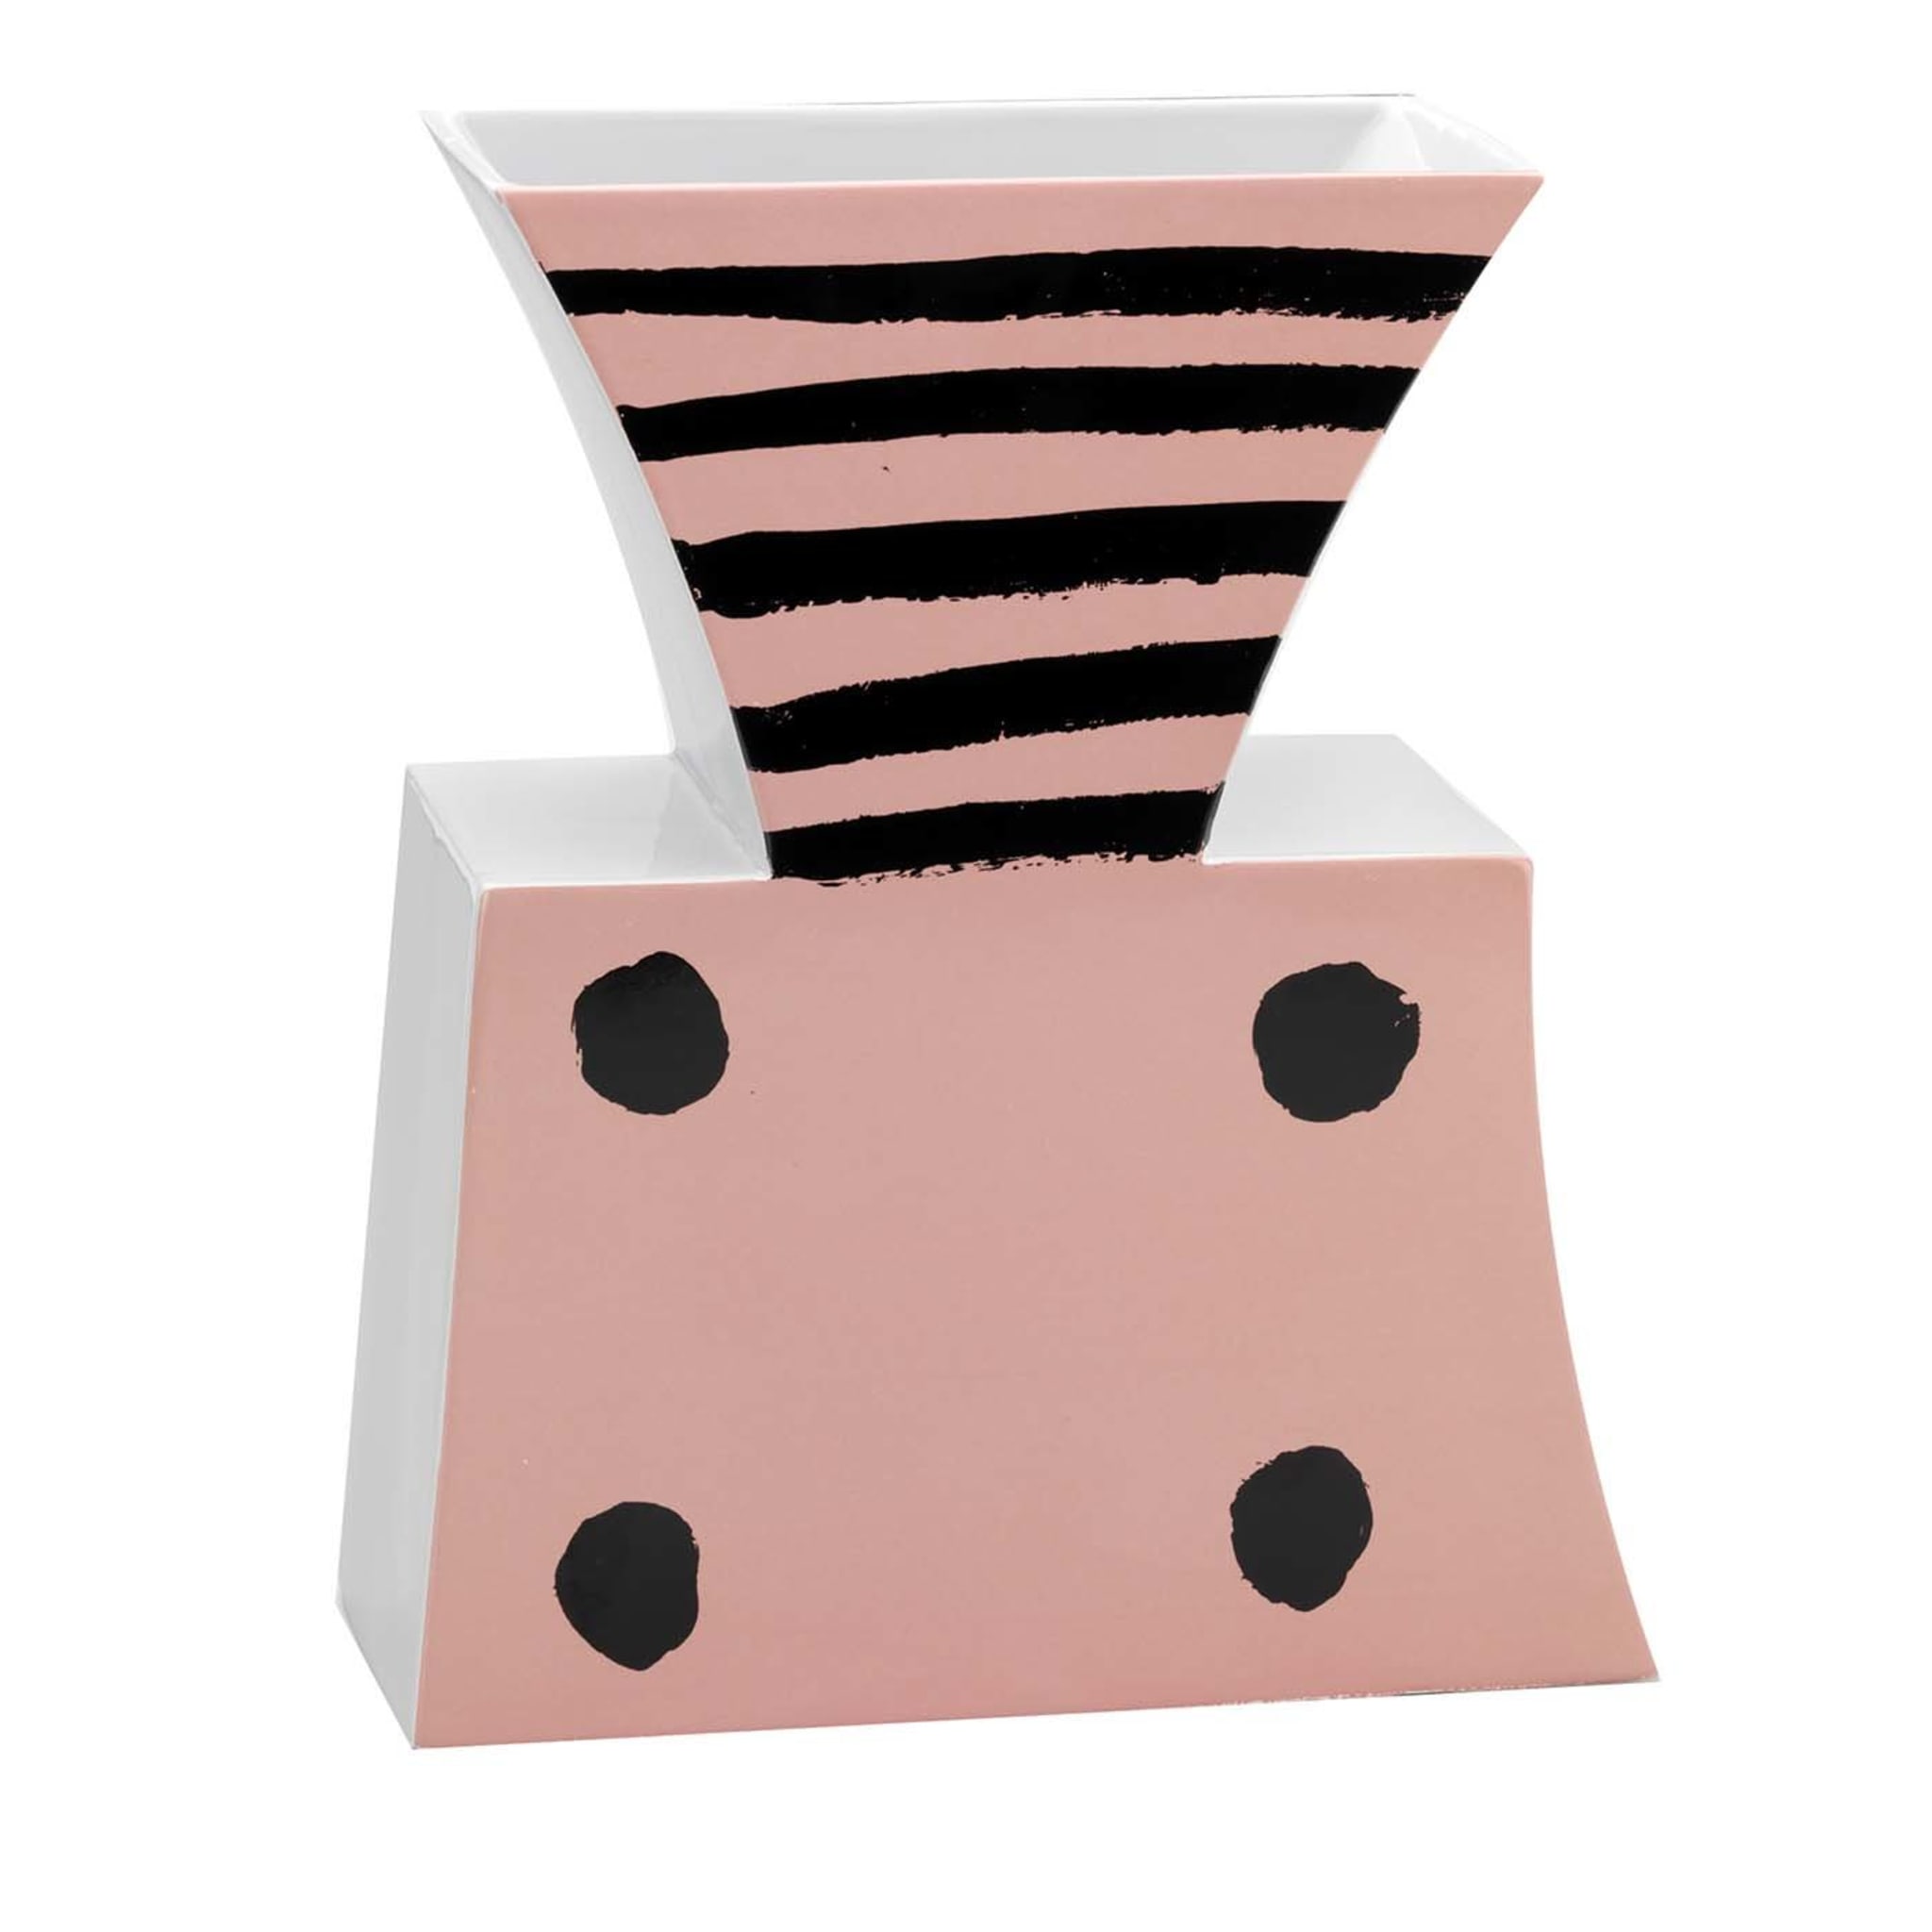 Candy Vase de Roger Selden - Post Design - Vue alternative 1